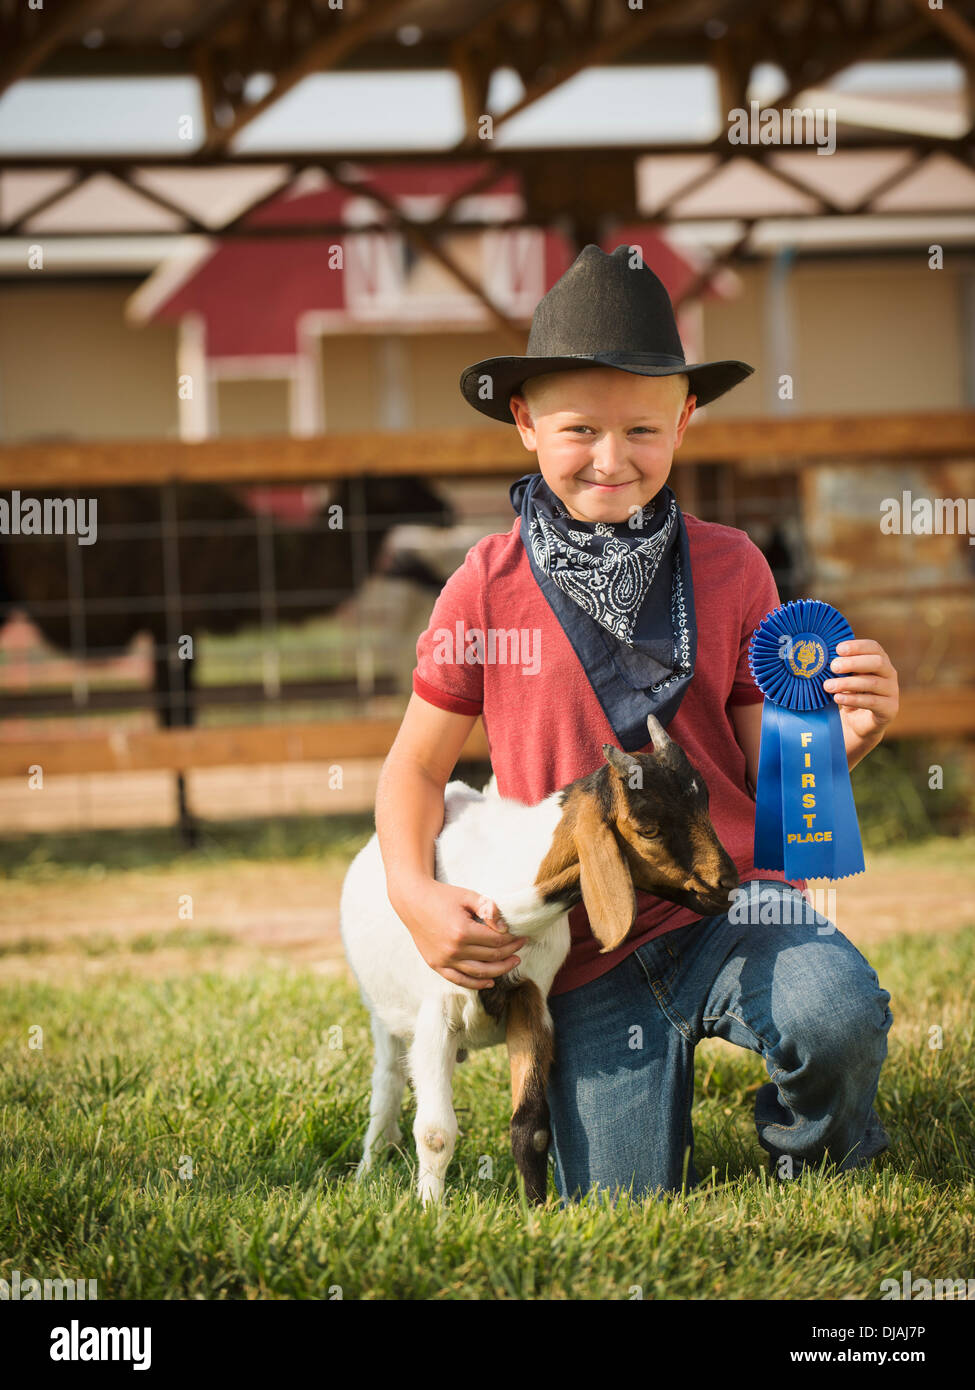 Young boy avec prize winning goat on farm Banque D'Images